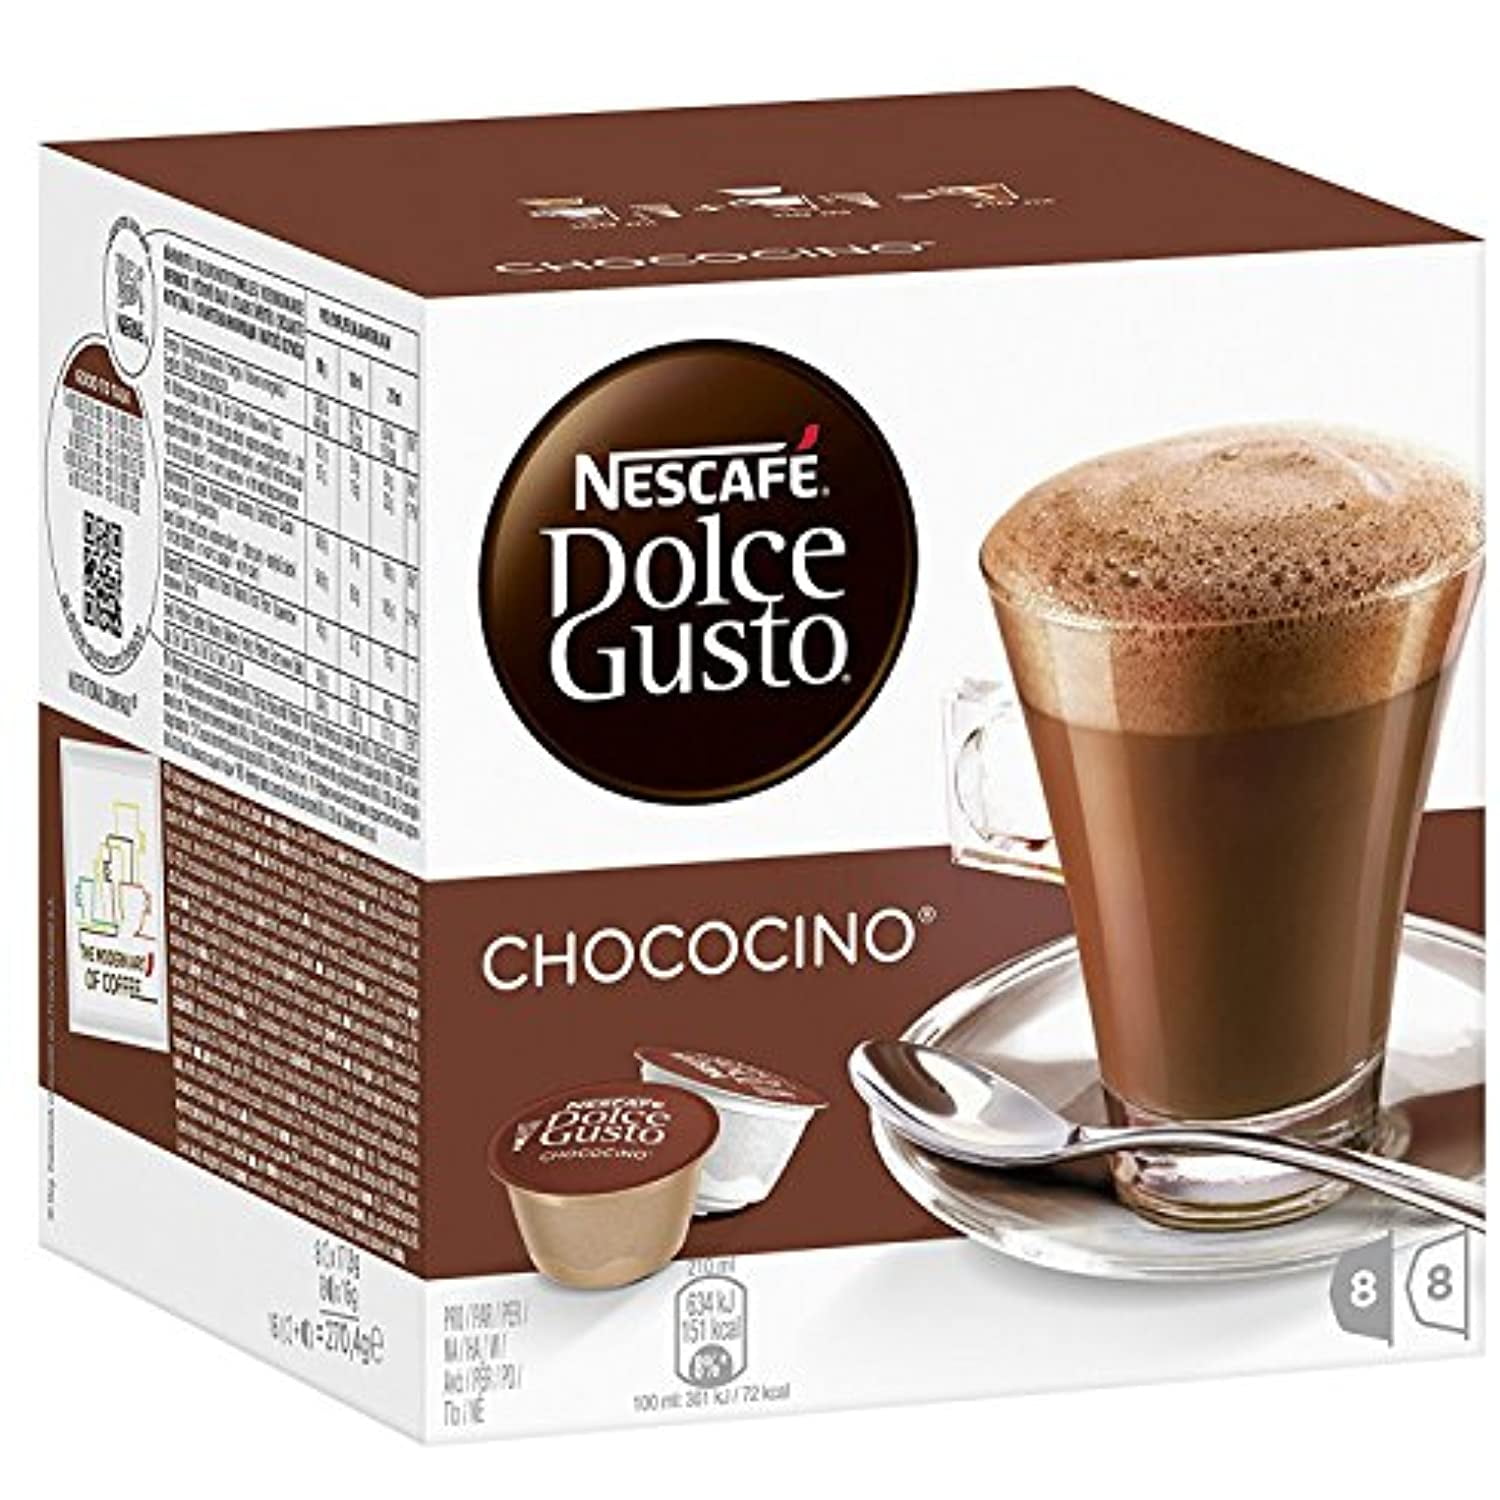 Nescafé Dolce Gusto Chococino 256g - Courses à Domicile